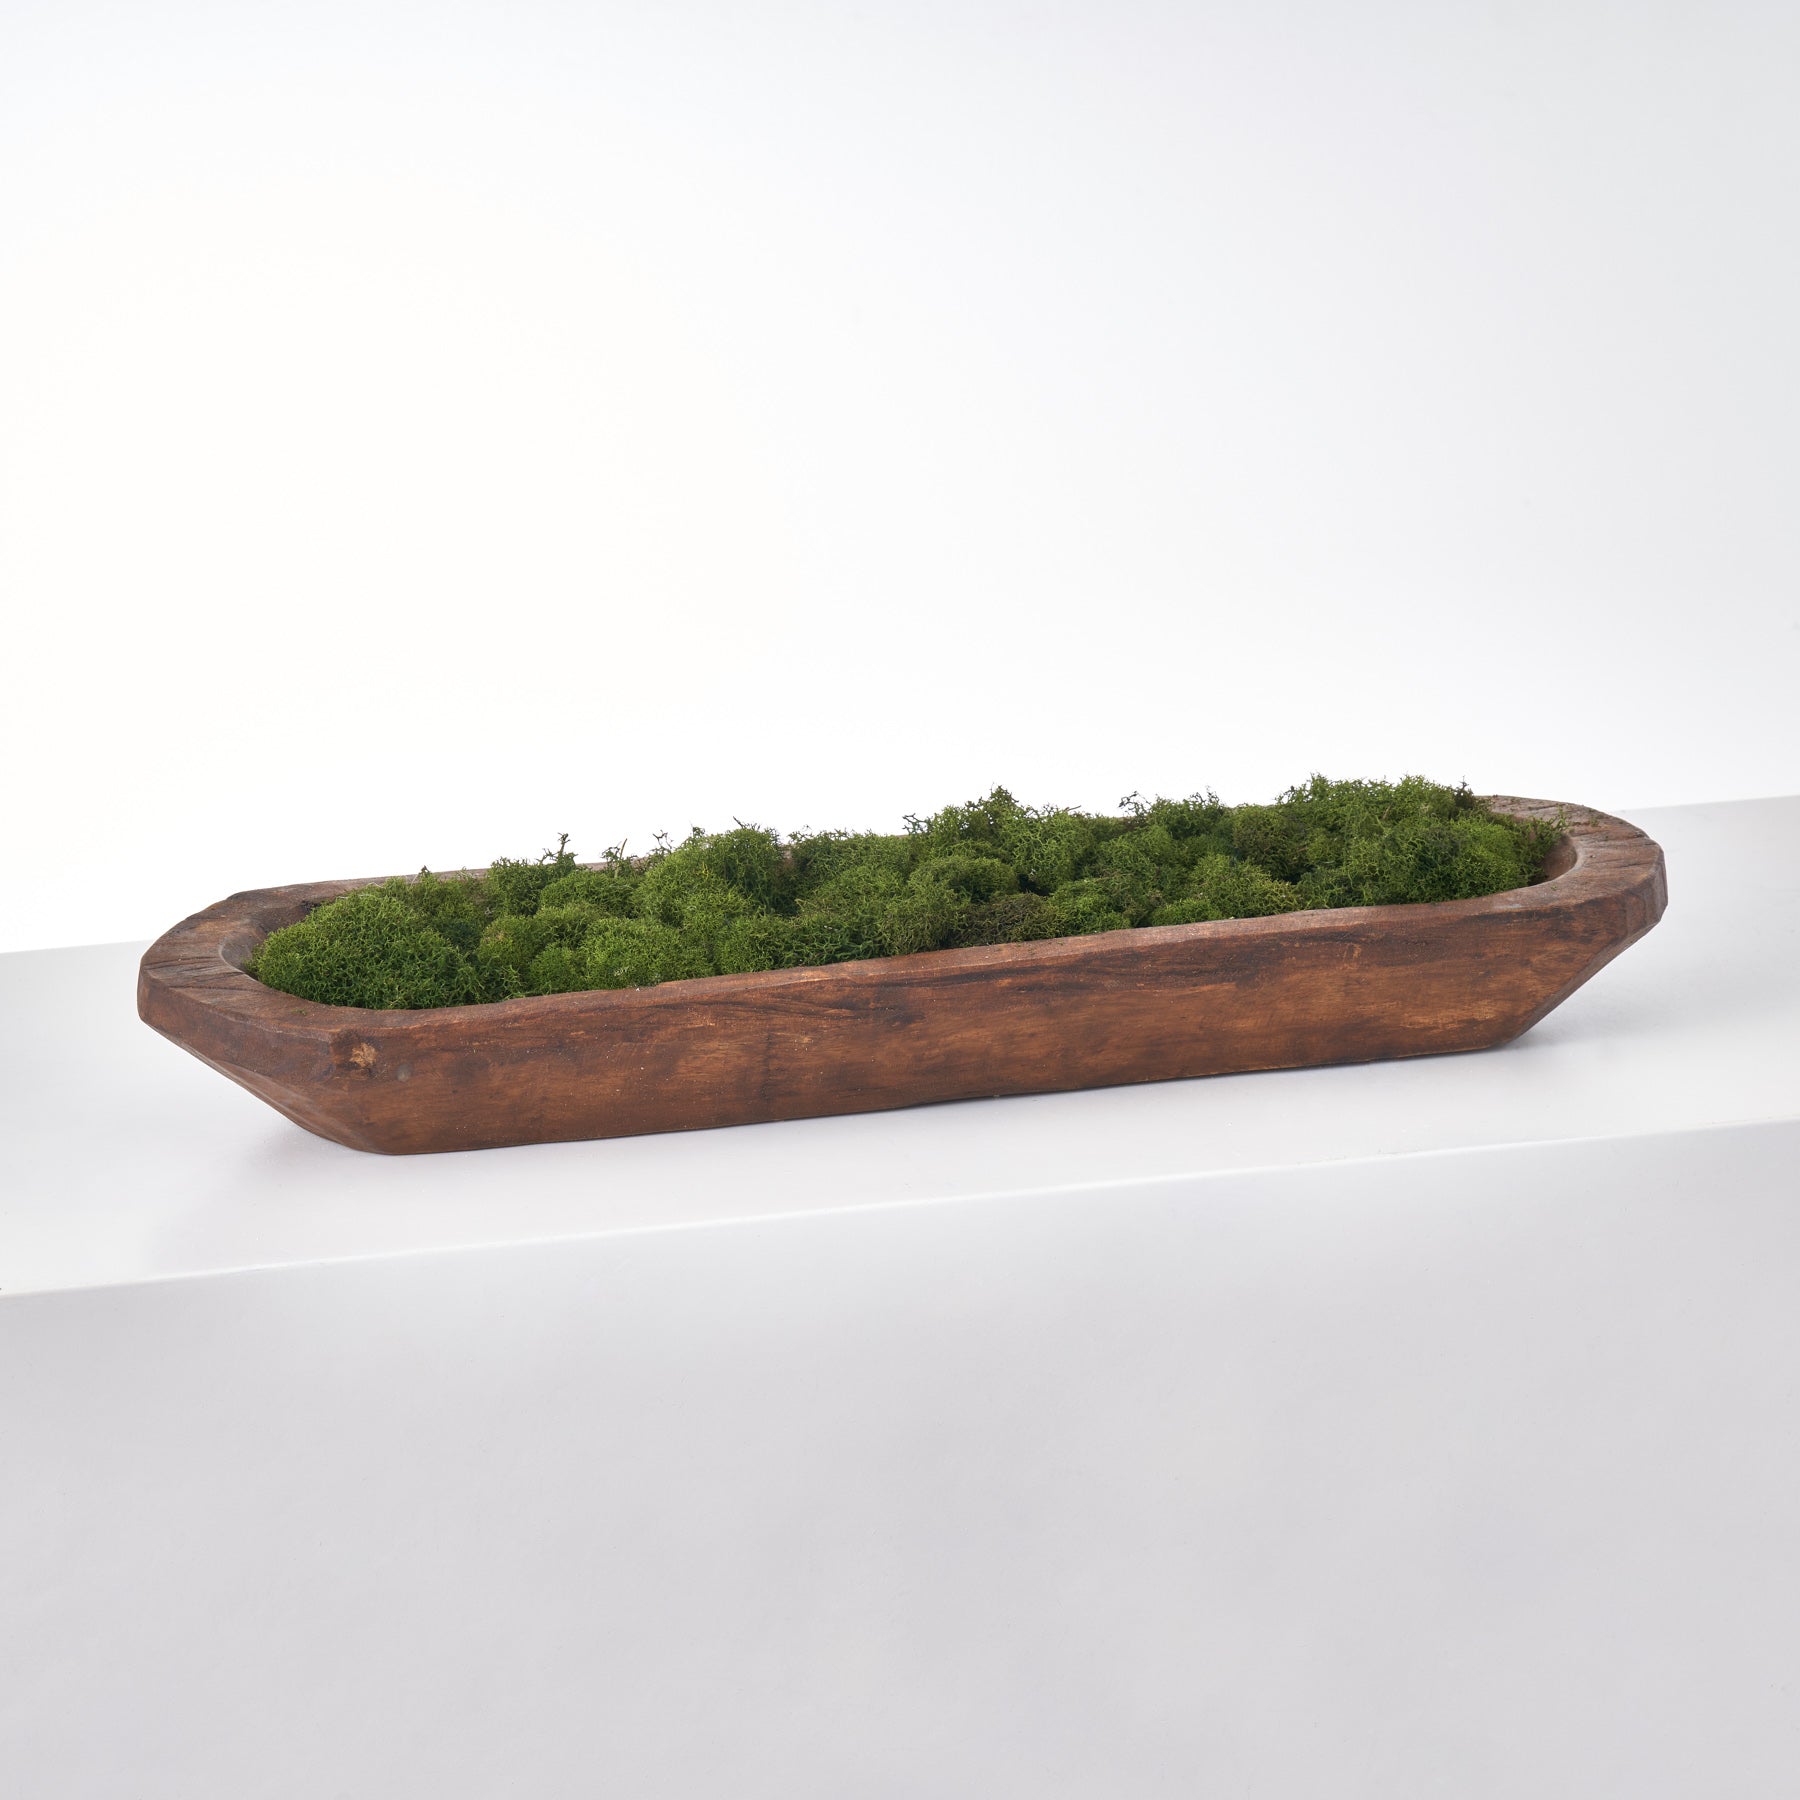 Moss bowl restoration hardware inspired.